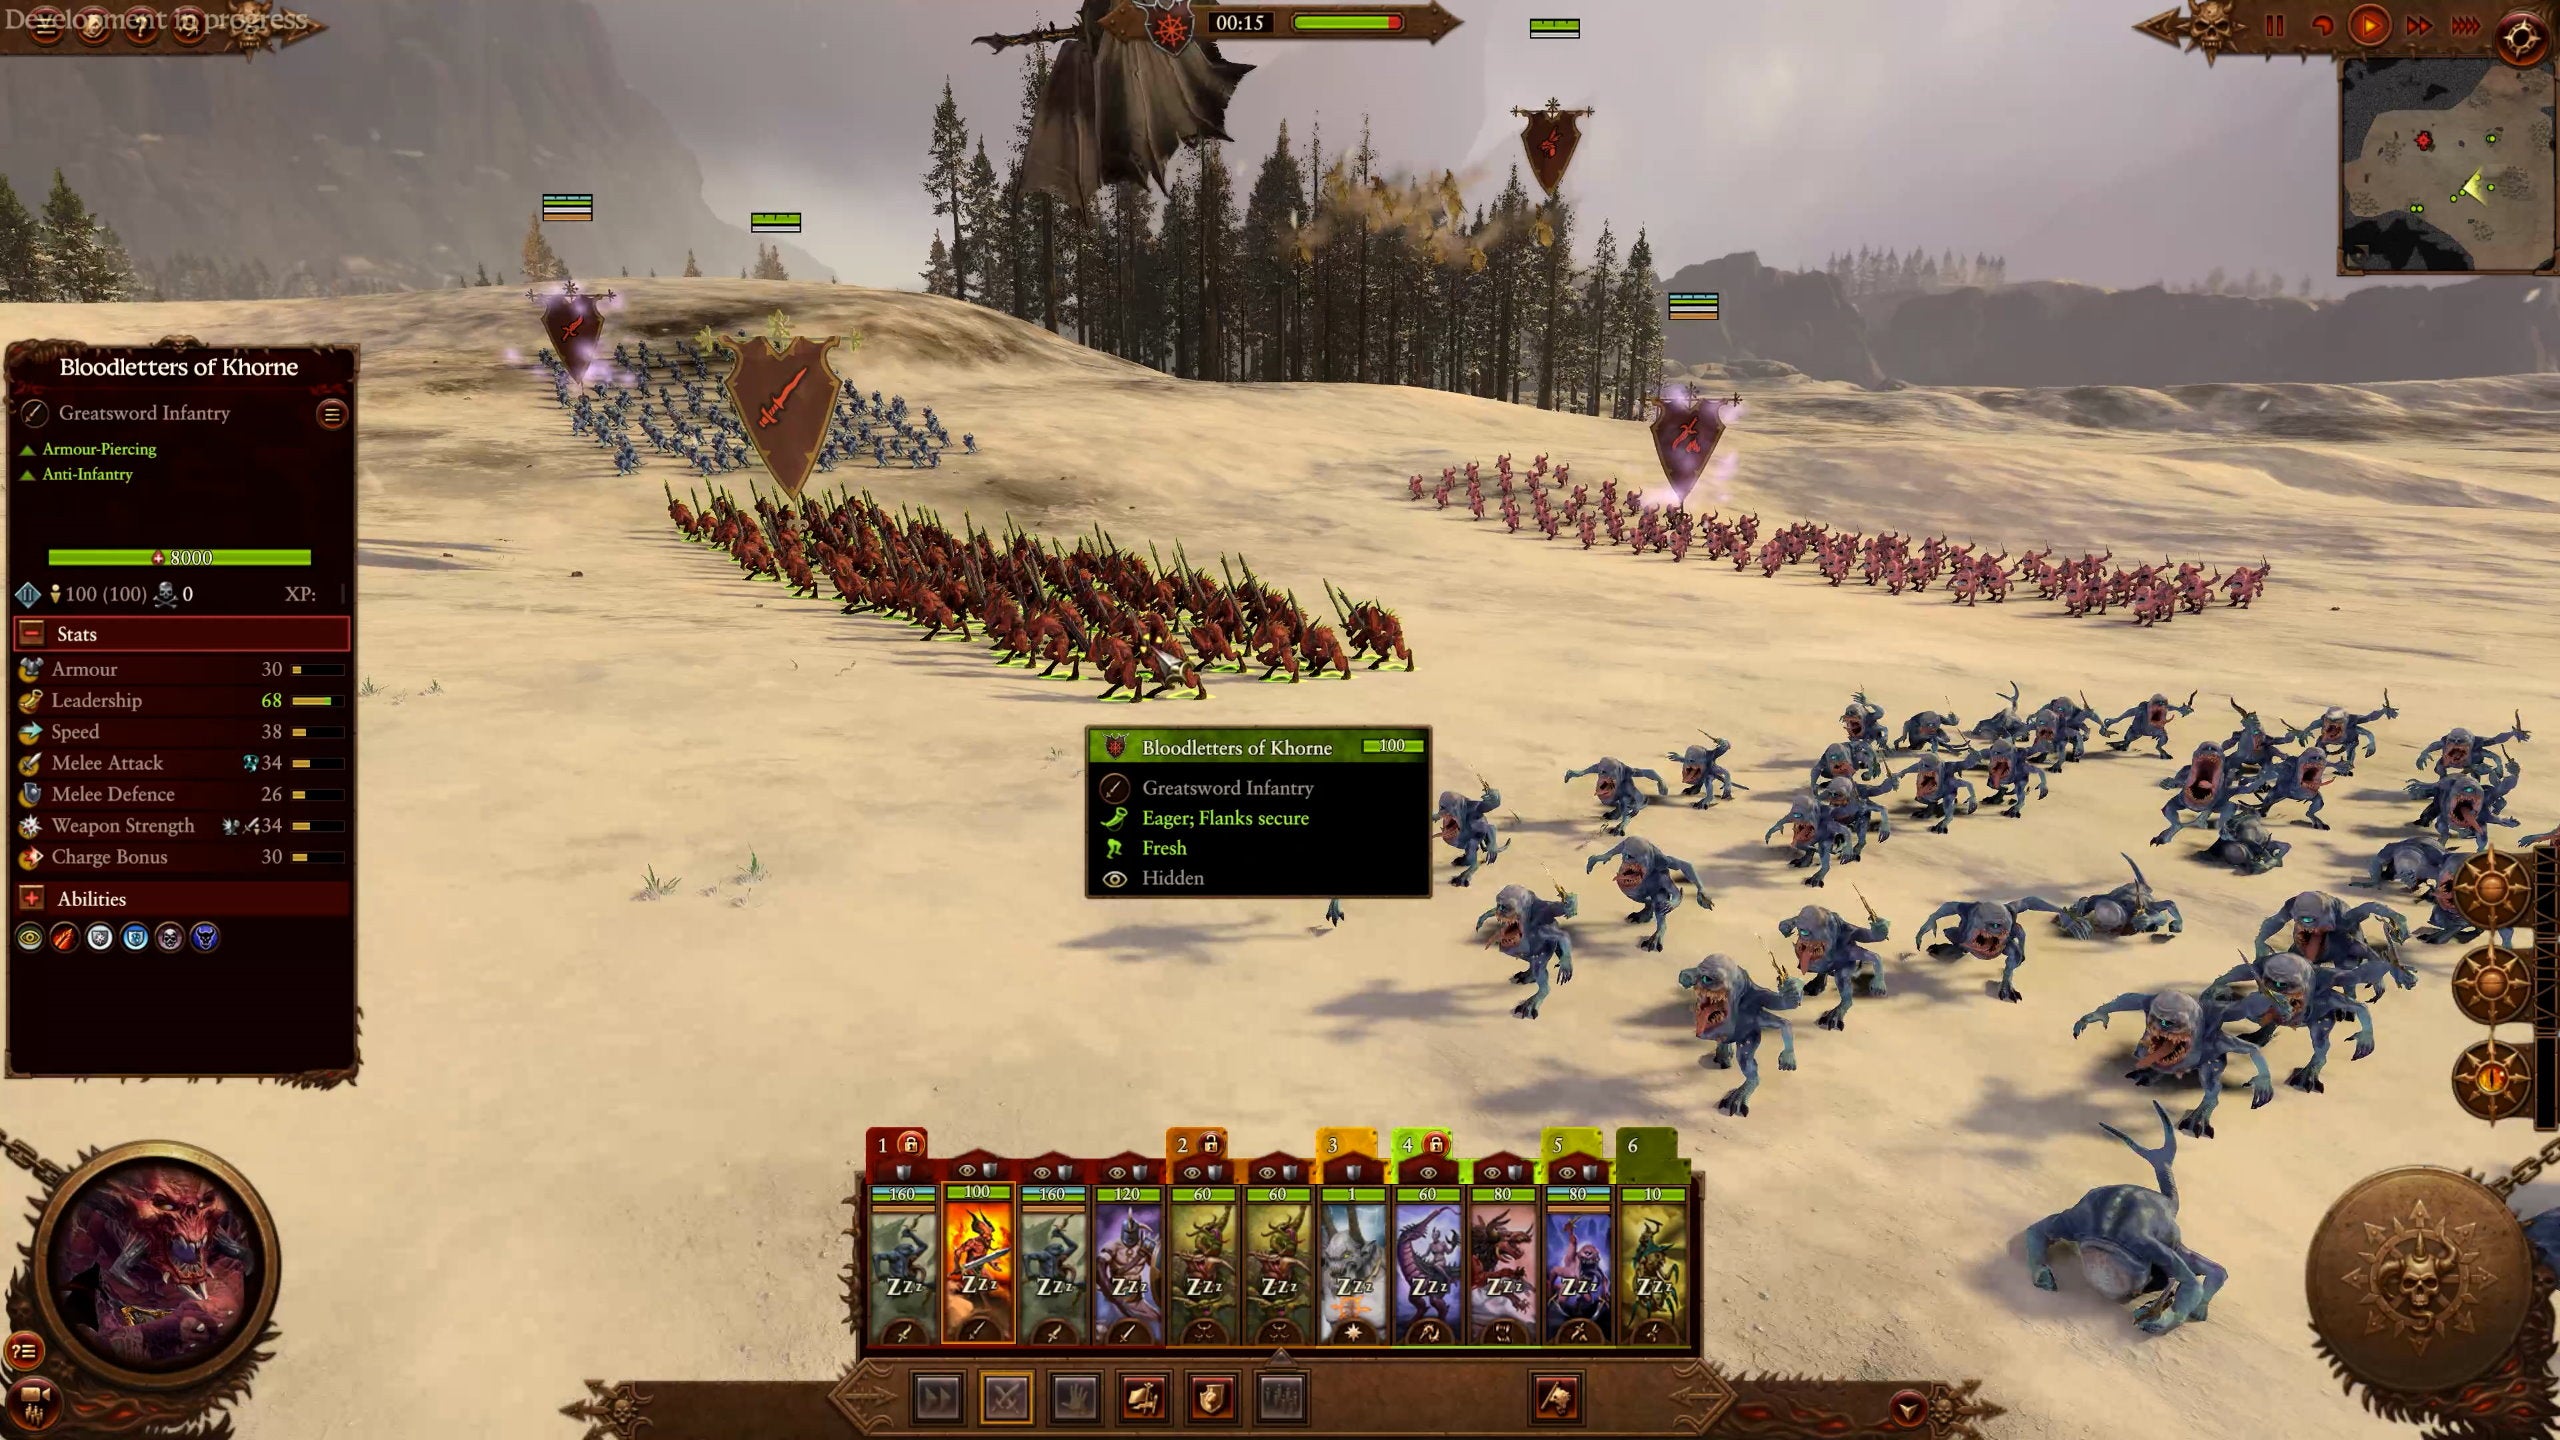 Units rush forward across a snowy landscape in Total War: Warhammer 3